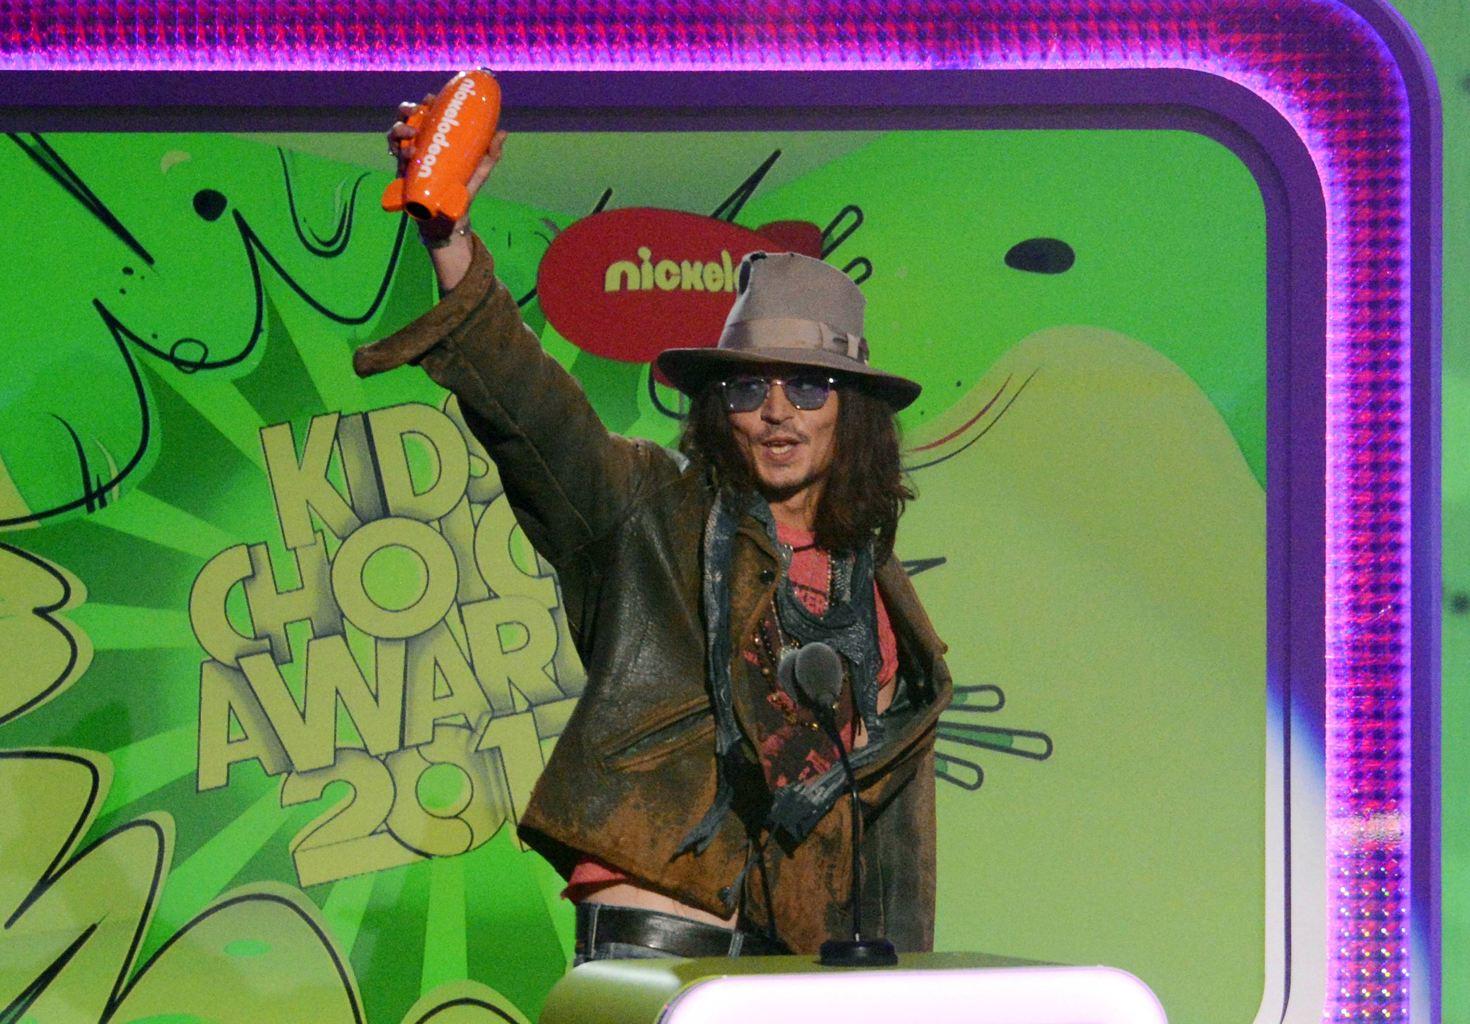 Johnny-Depp-Kids-Choice-Awards